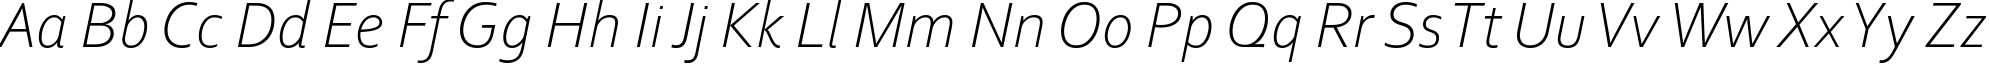 Пример написания английского алфавита шрифтом Corbel Light Italic